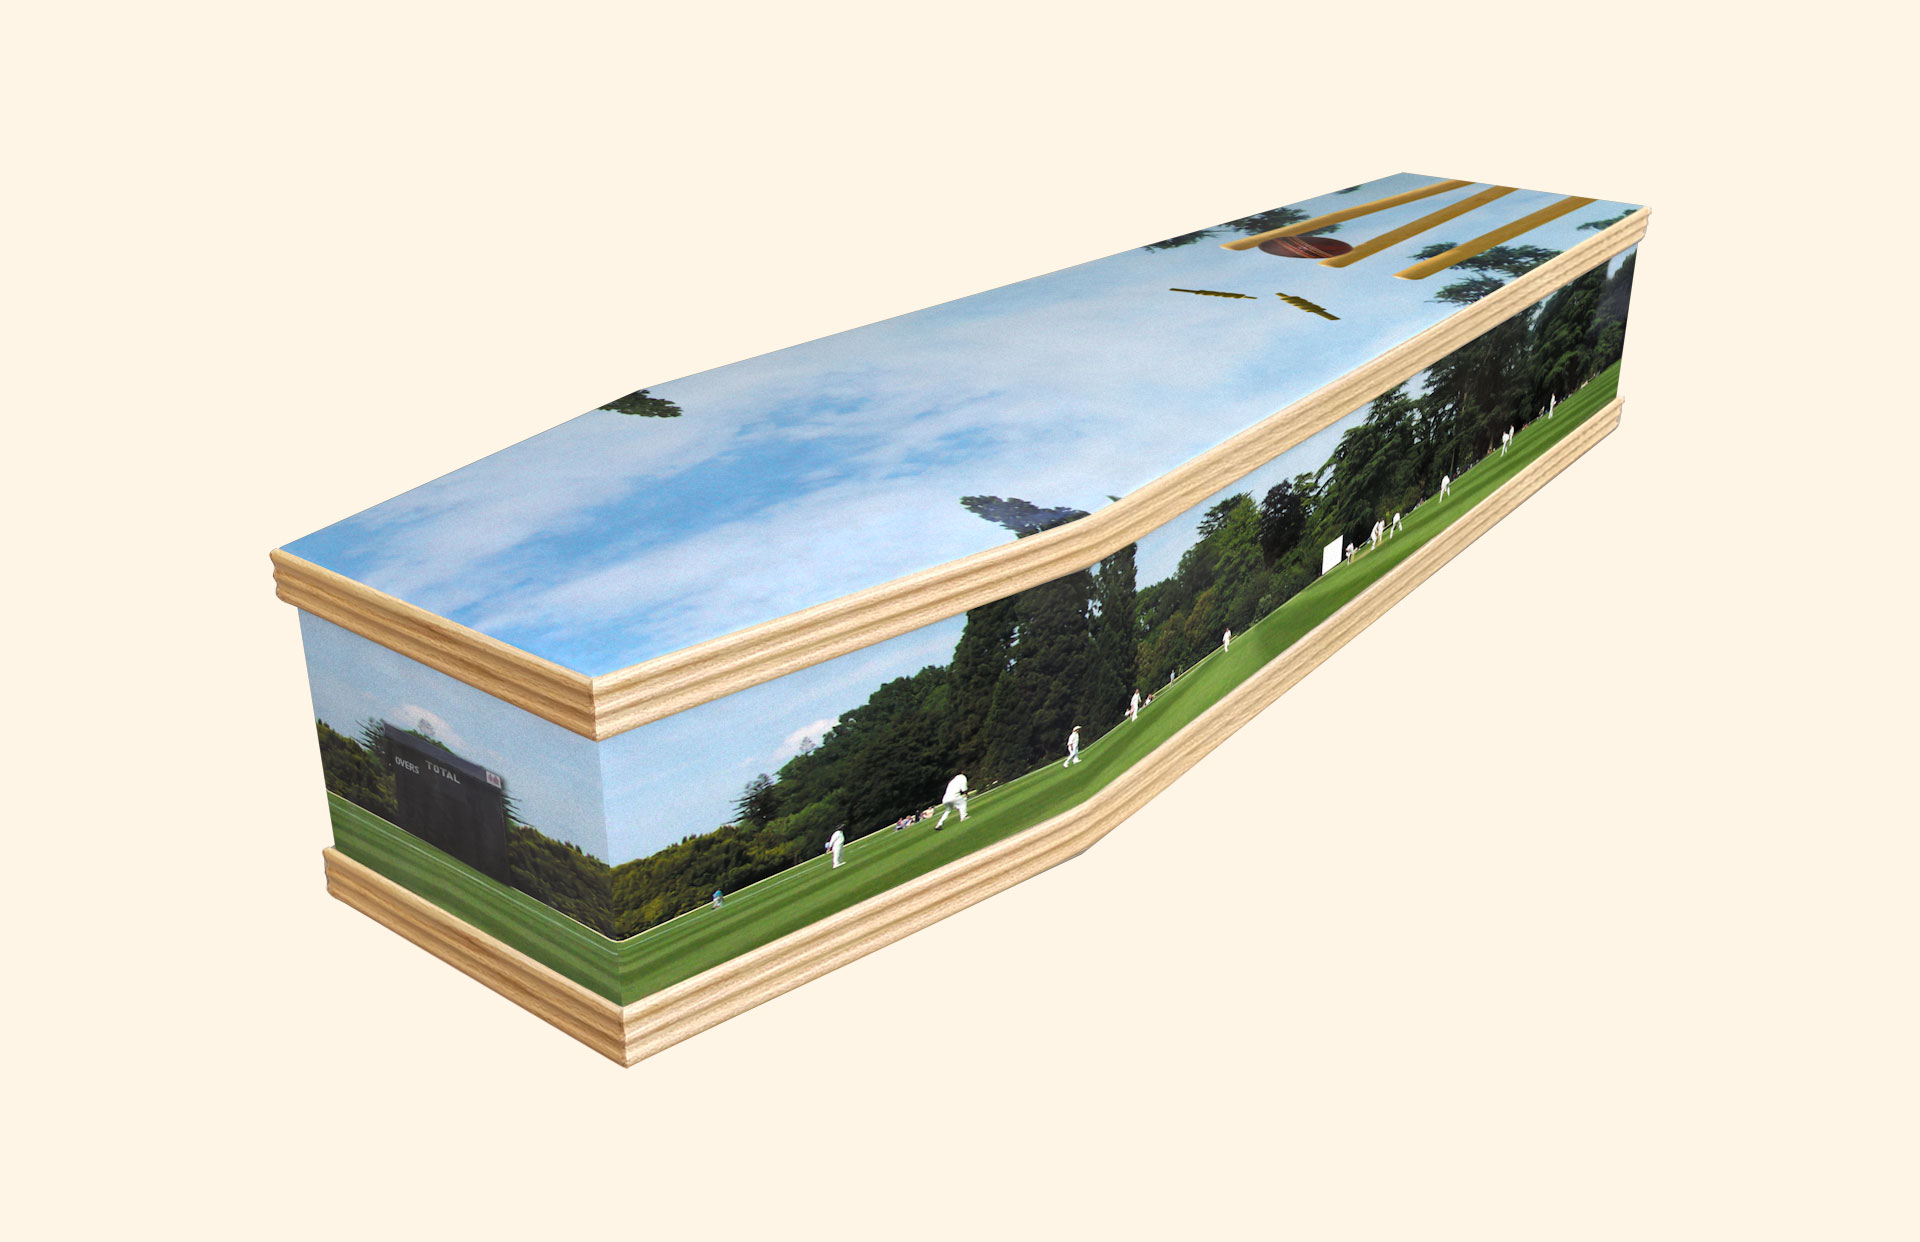 Cricket design on a classic coffin